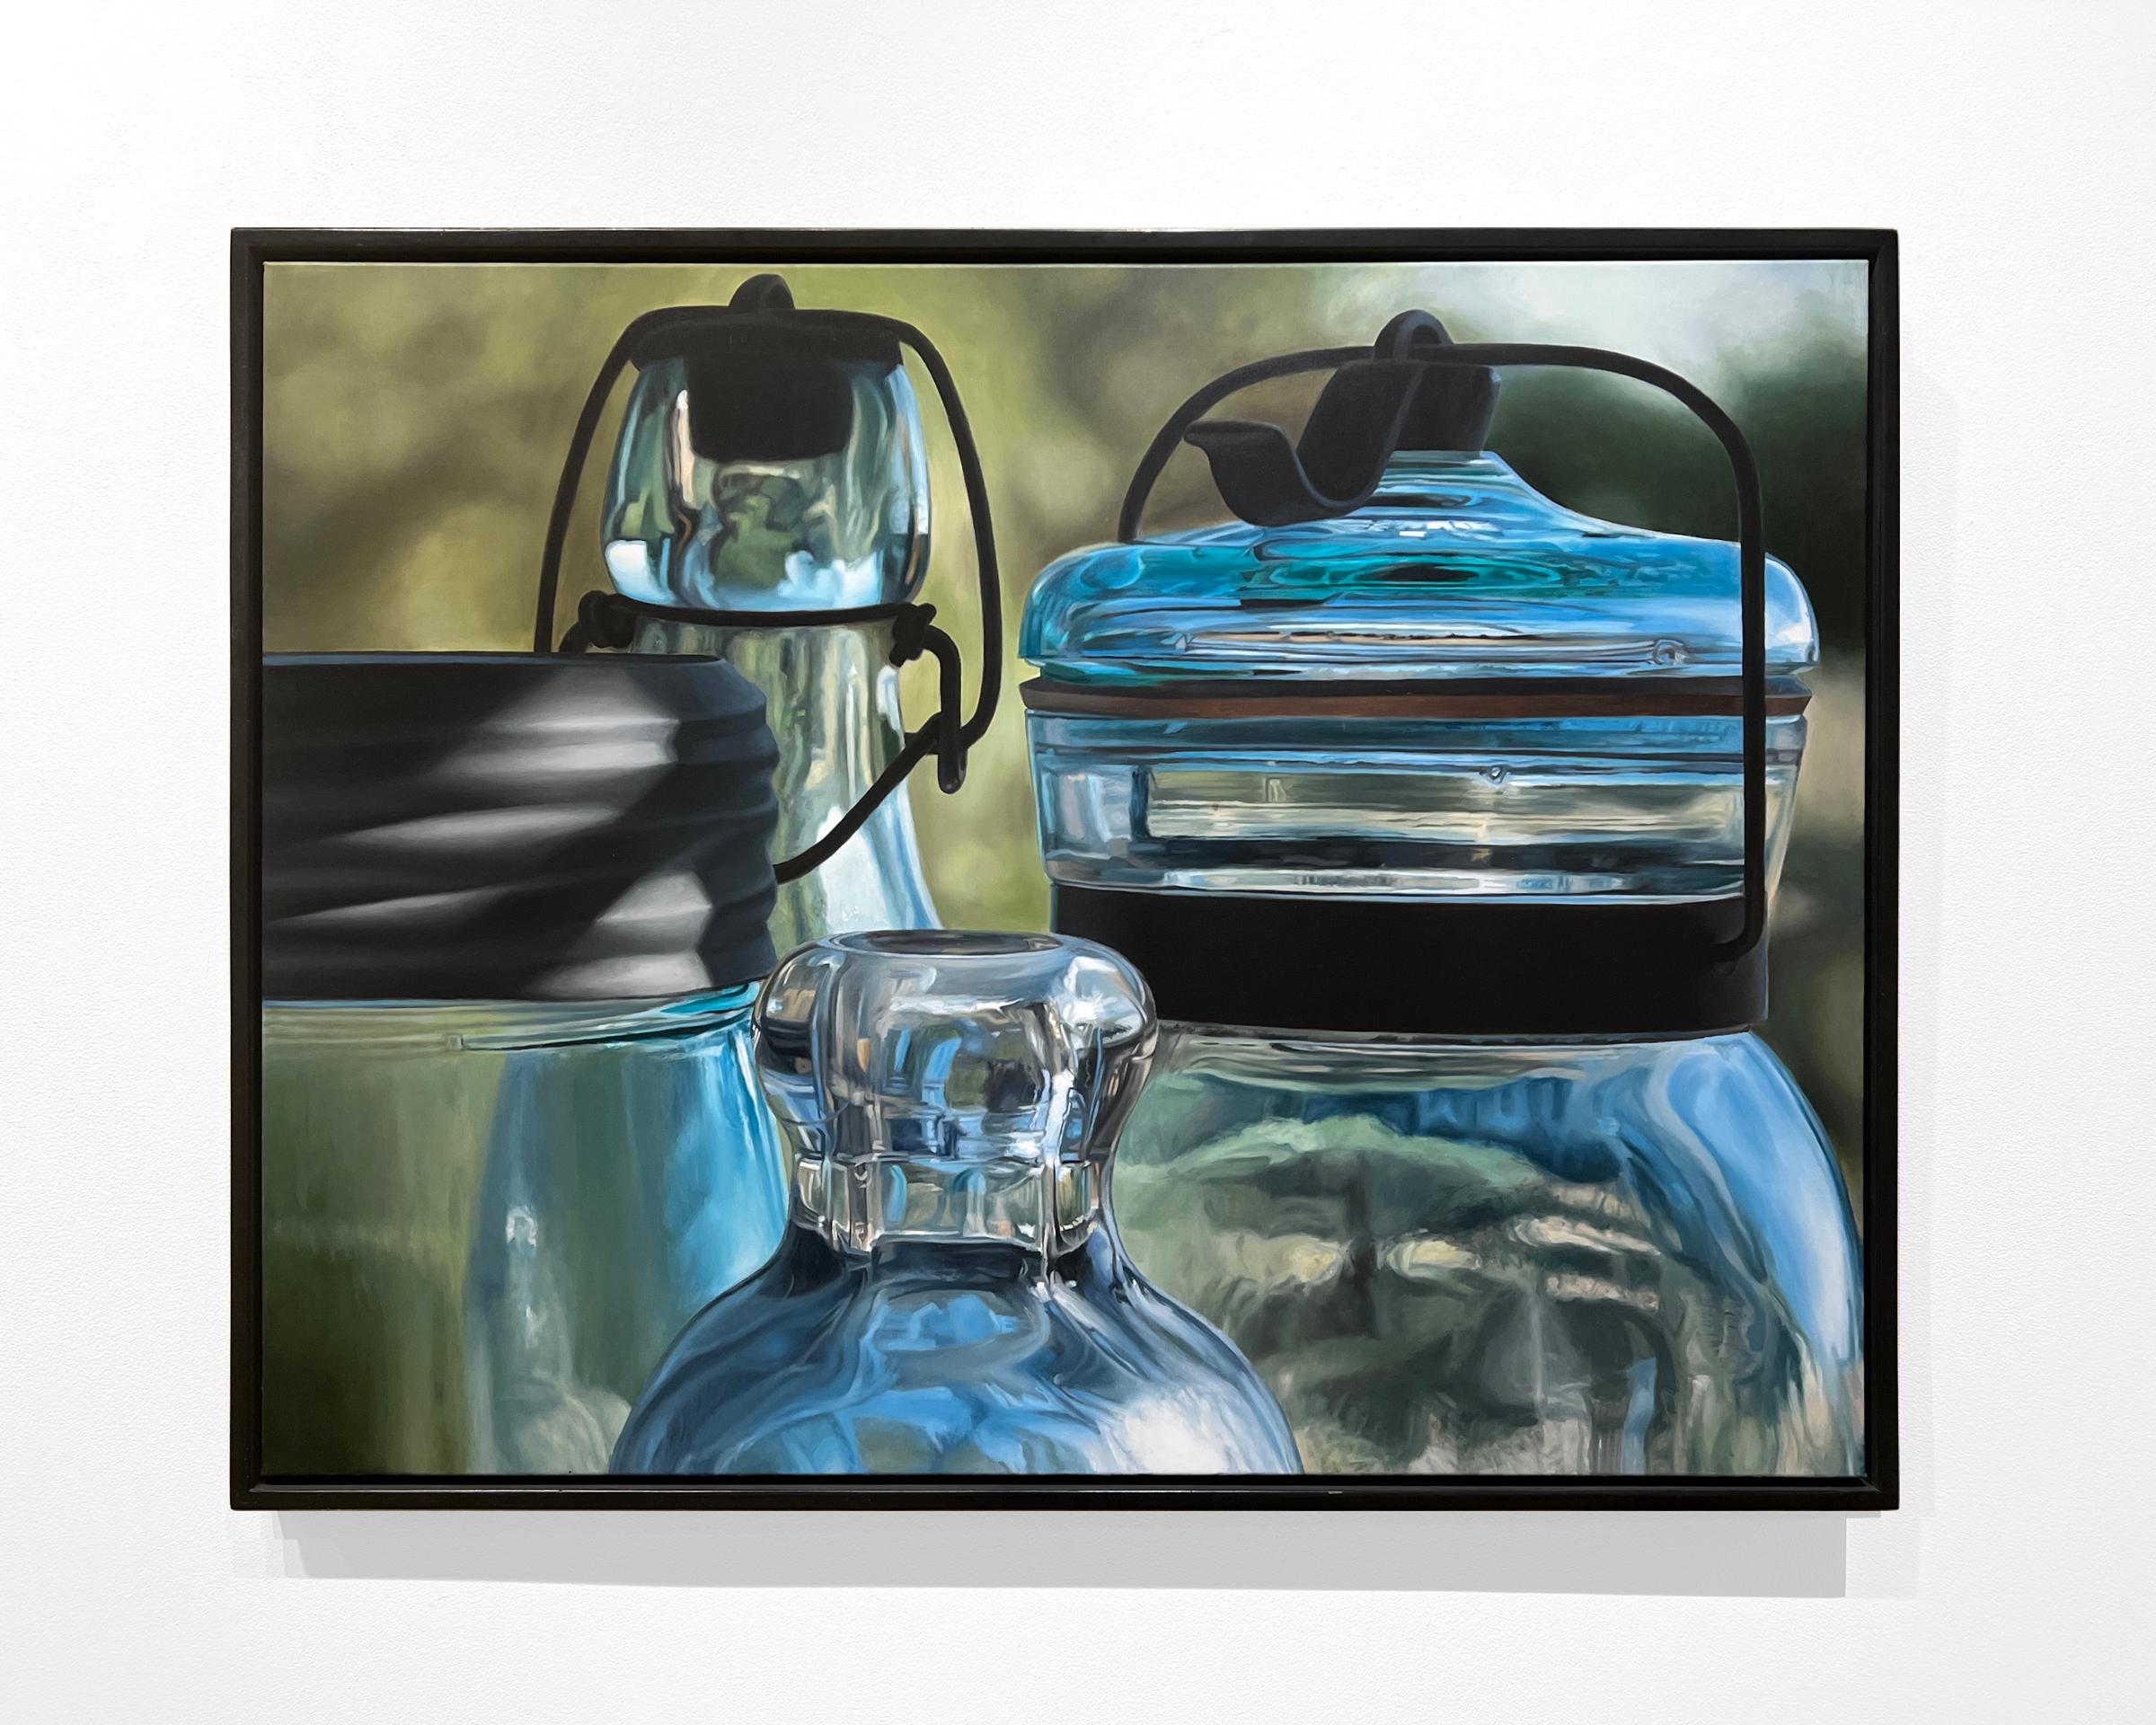 MIDSUMMER DAY - Photorealism / Still Life / Glass Mason Jars / Blues & Greens - Painting by Steve Smulka